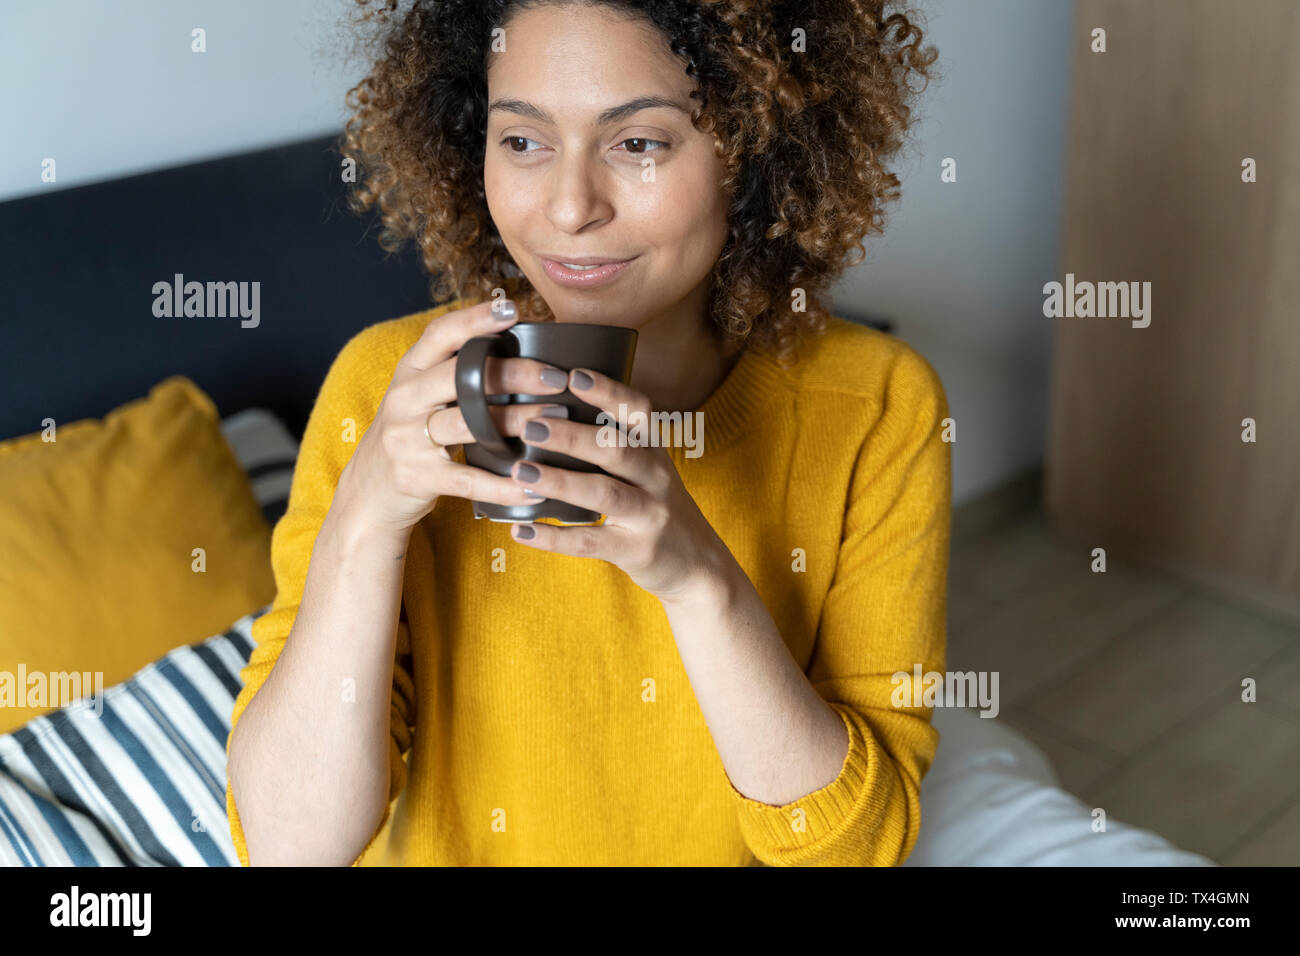 Woman sitting on bed, taking a break, drinking coffee Stock Photo